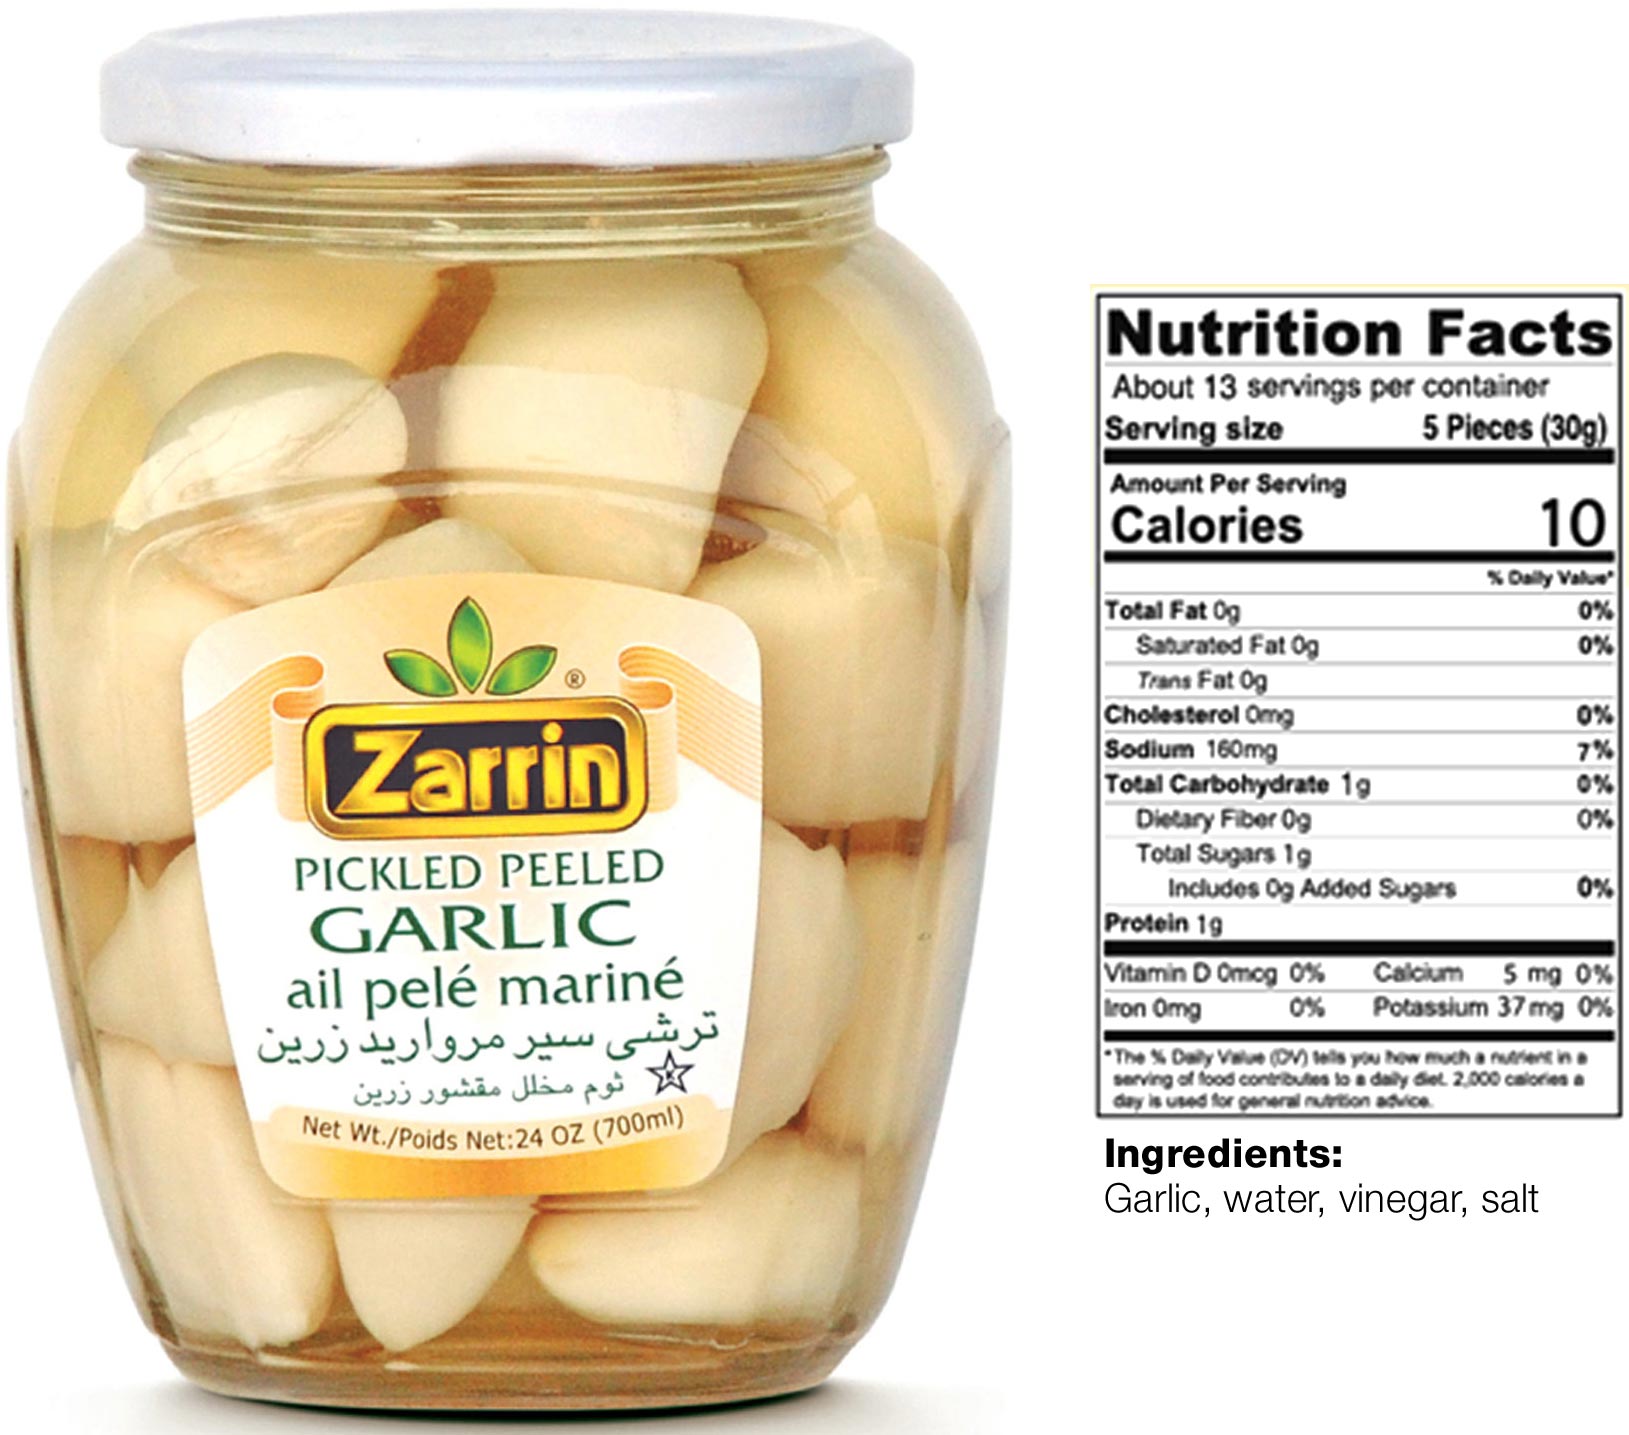 Zarrin Pickled Peeled Garlic In 24oz net weight glass jar.